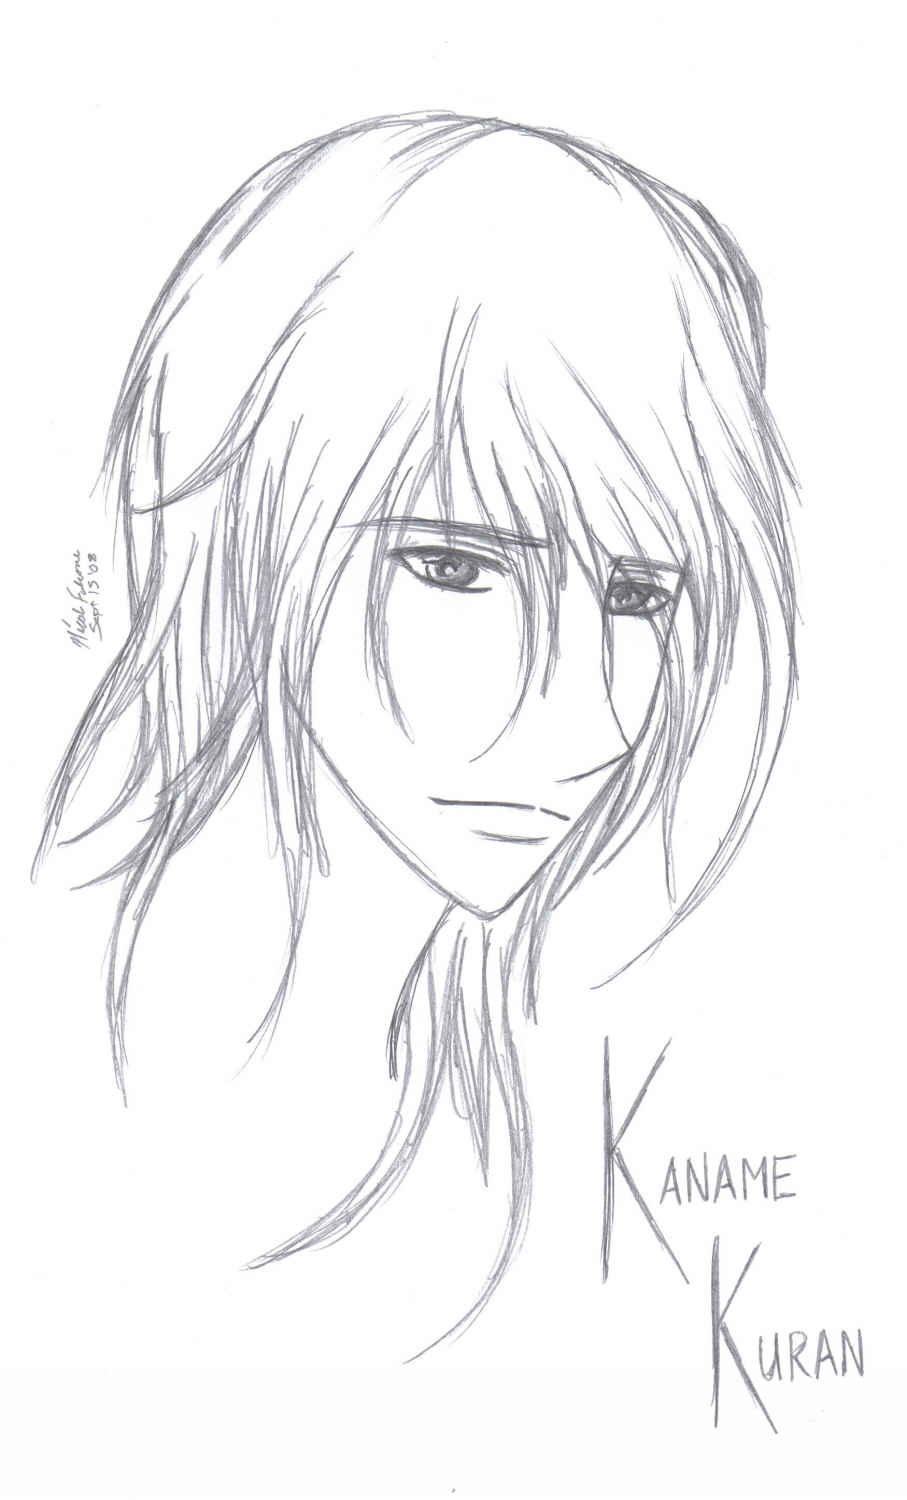 Kaname by DemonChild92